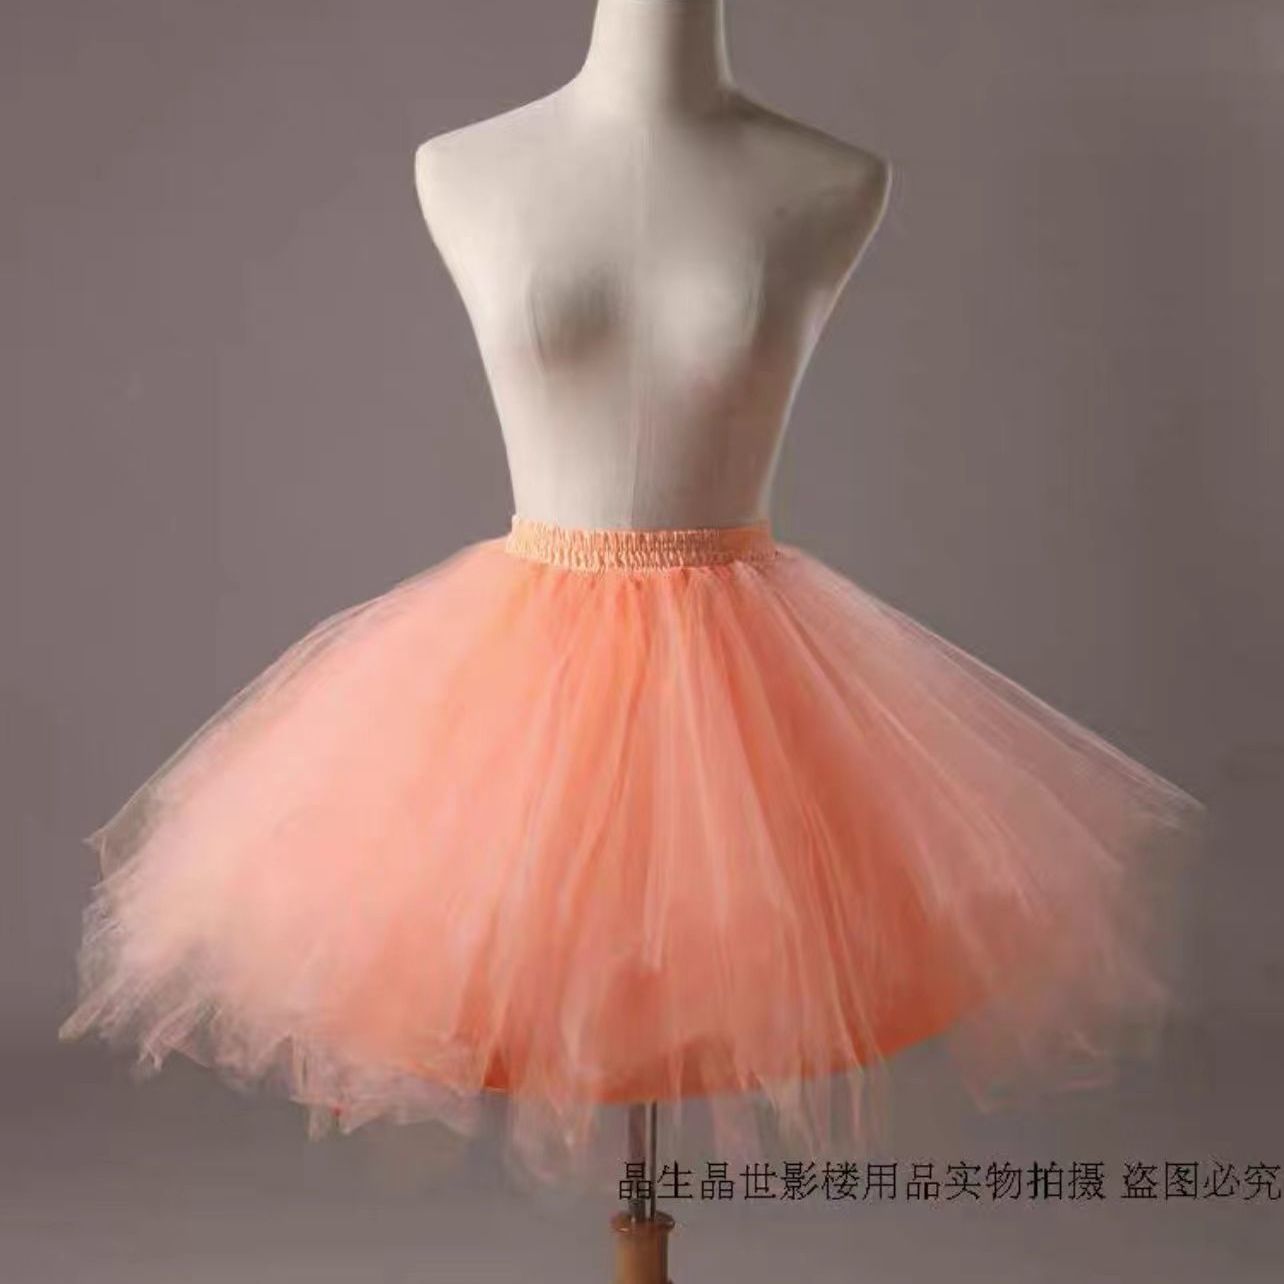 Tutu skirt skirt women's gauze skirt princess dress performance costume photography small skirt colorful gauze skirt dancing